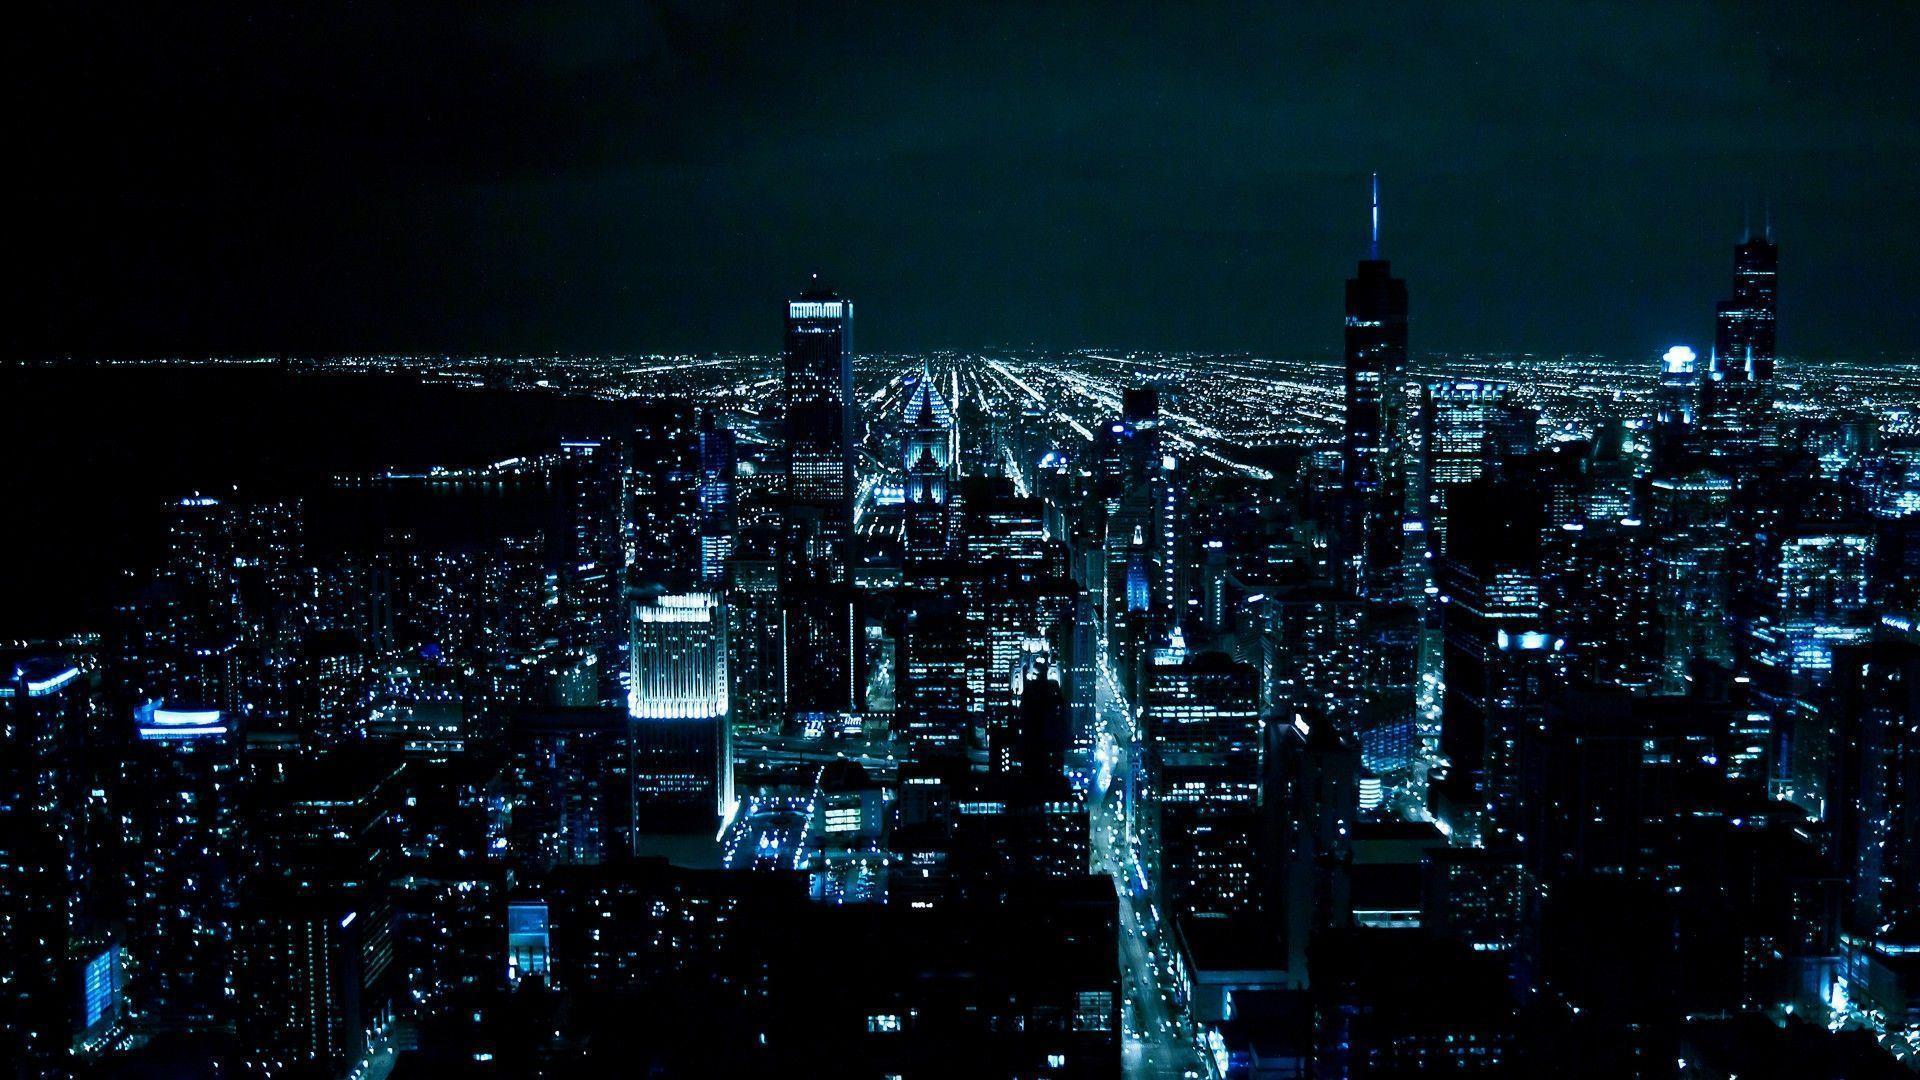 Gotham City Backgrounds